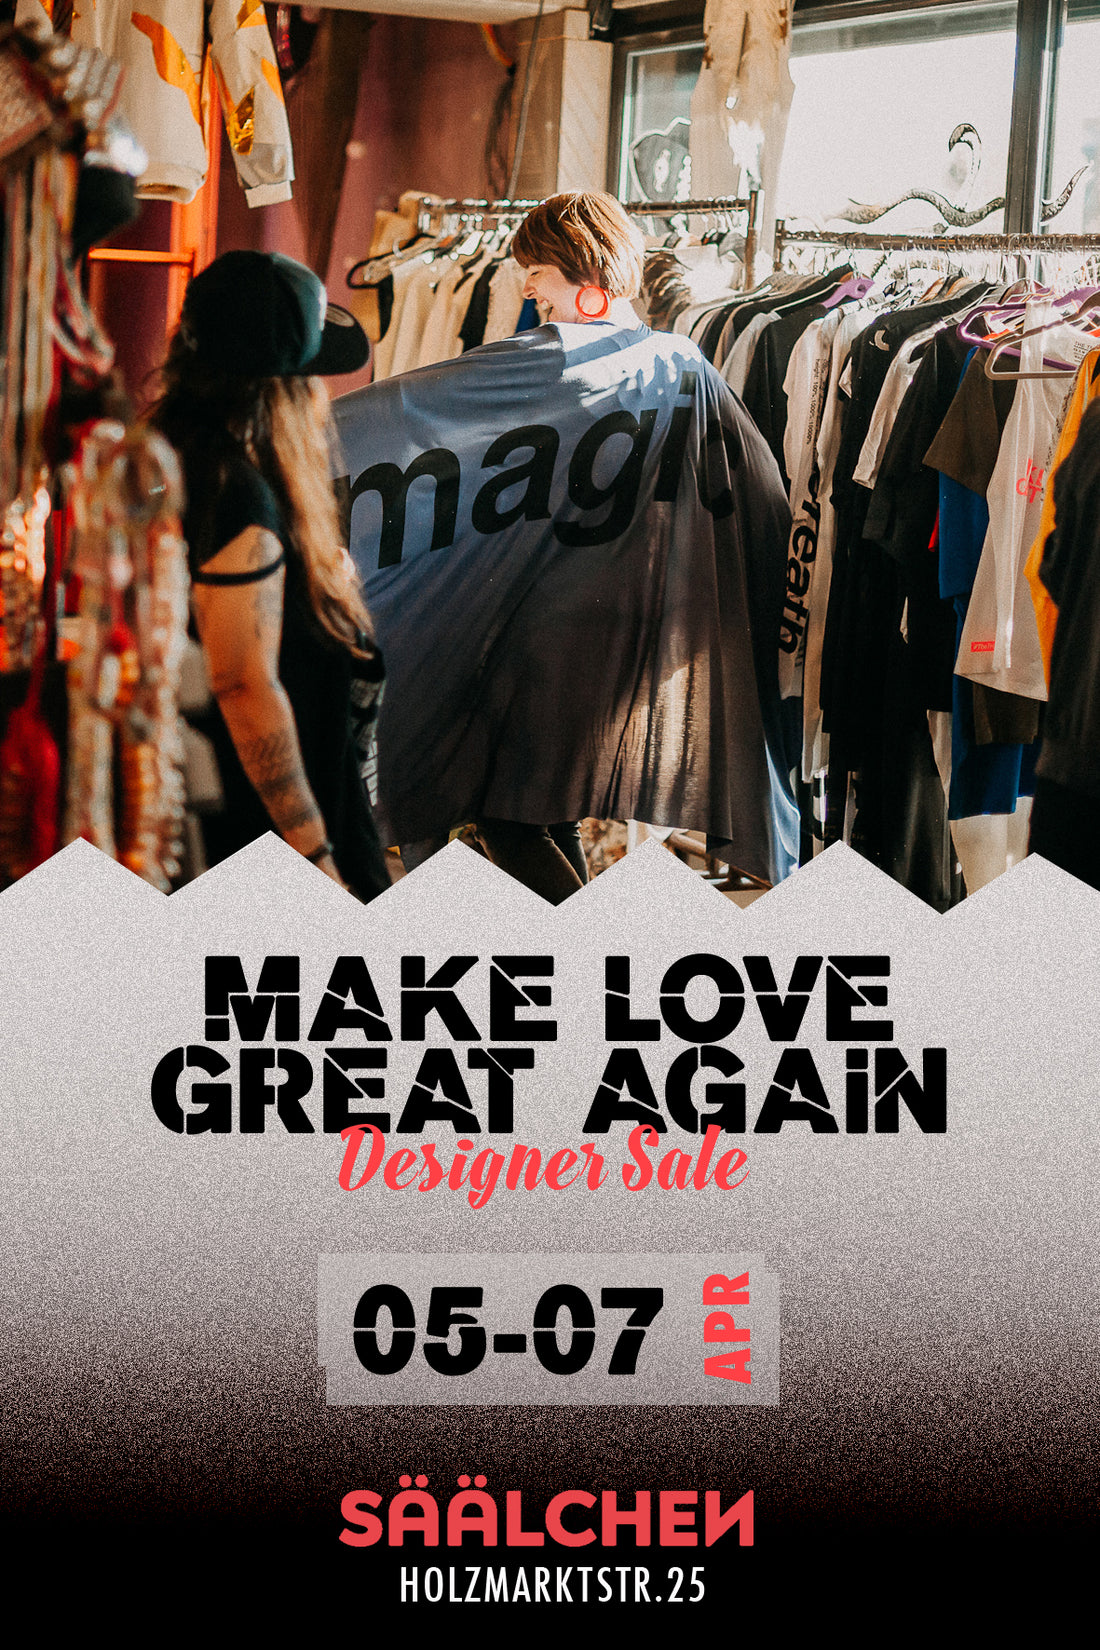 5. Make Love Great Again Designer Sale